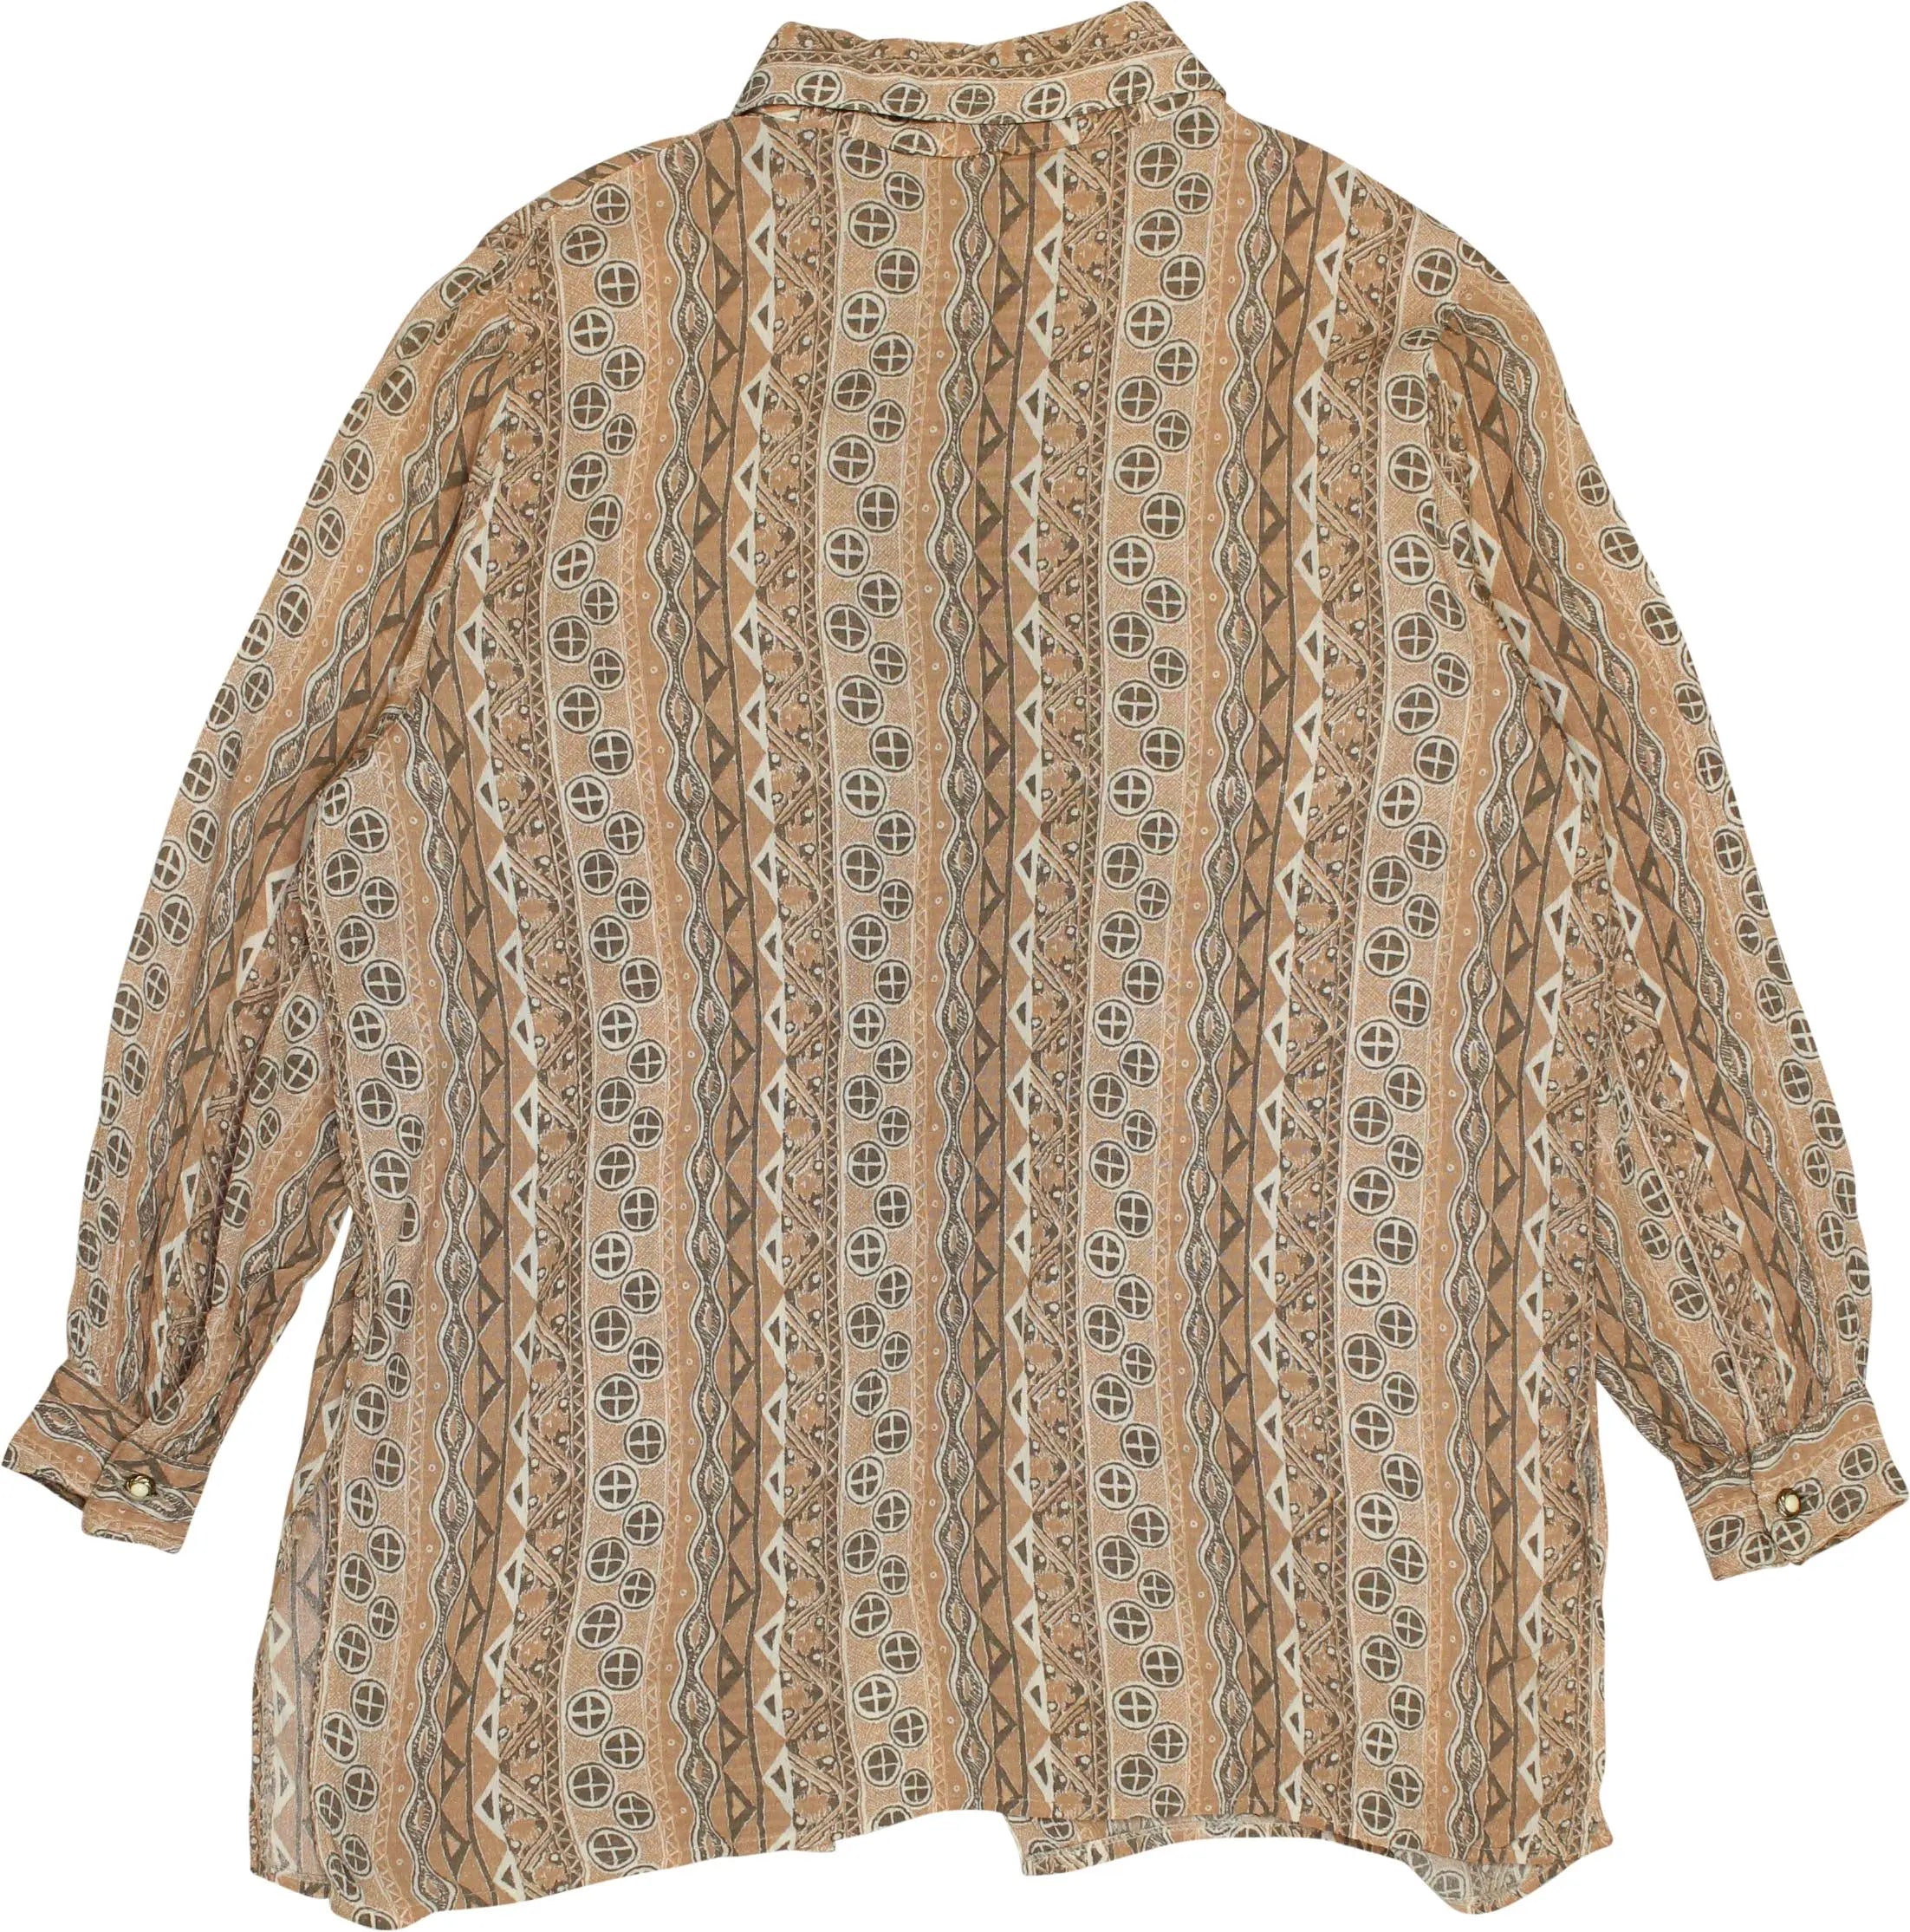 Golden - Patterned Shirt- ThriftTale.com - Vintage and second handclothing